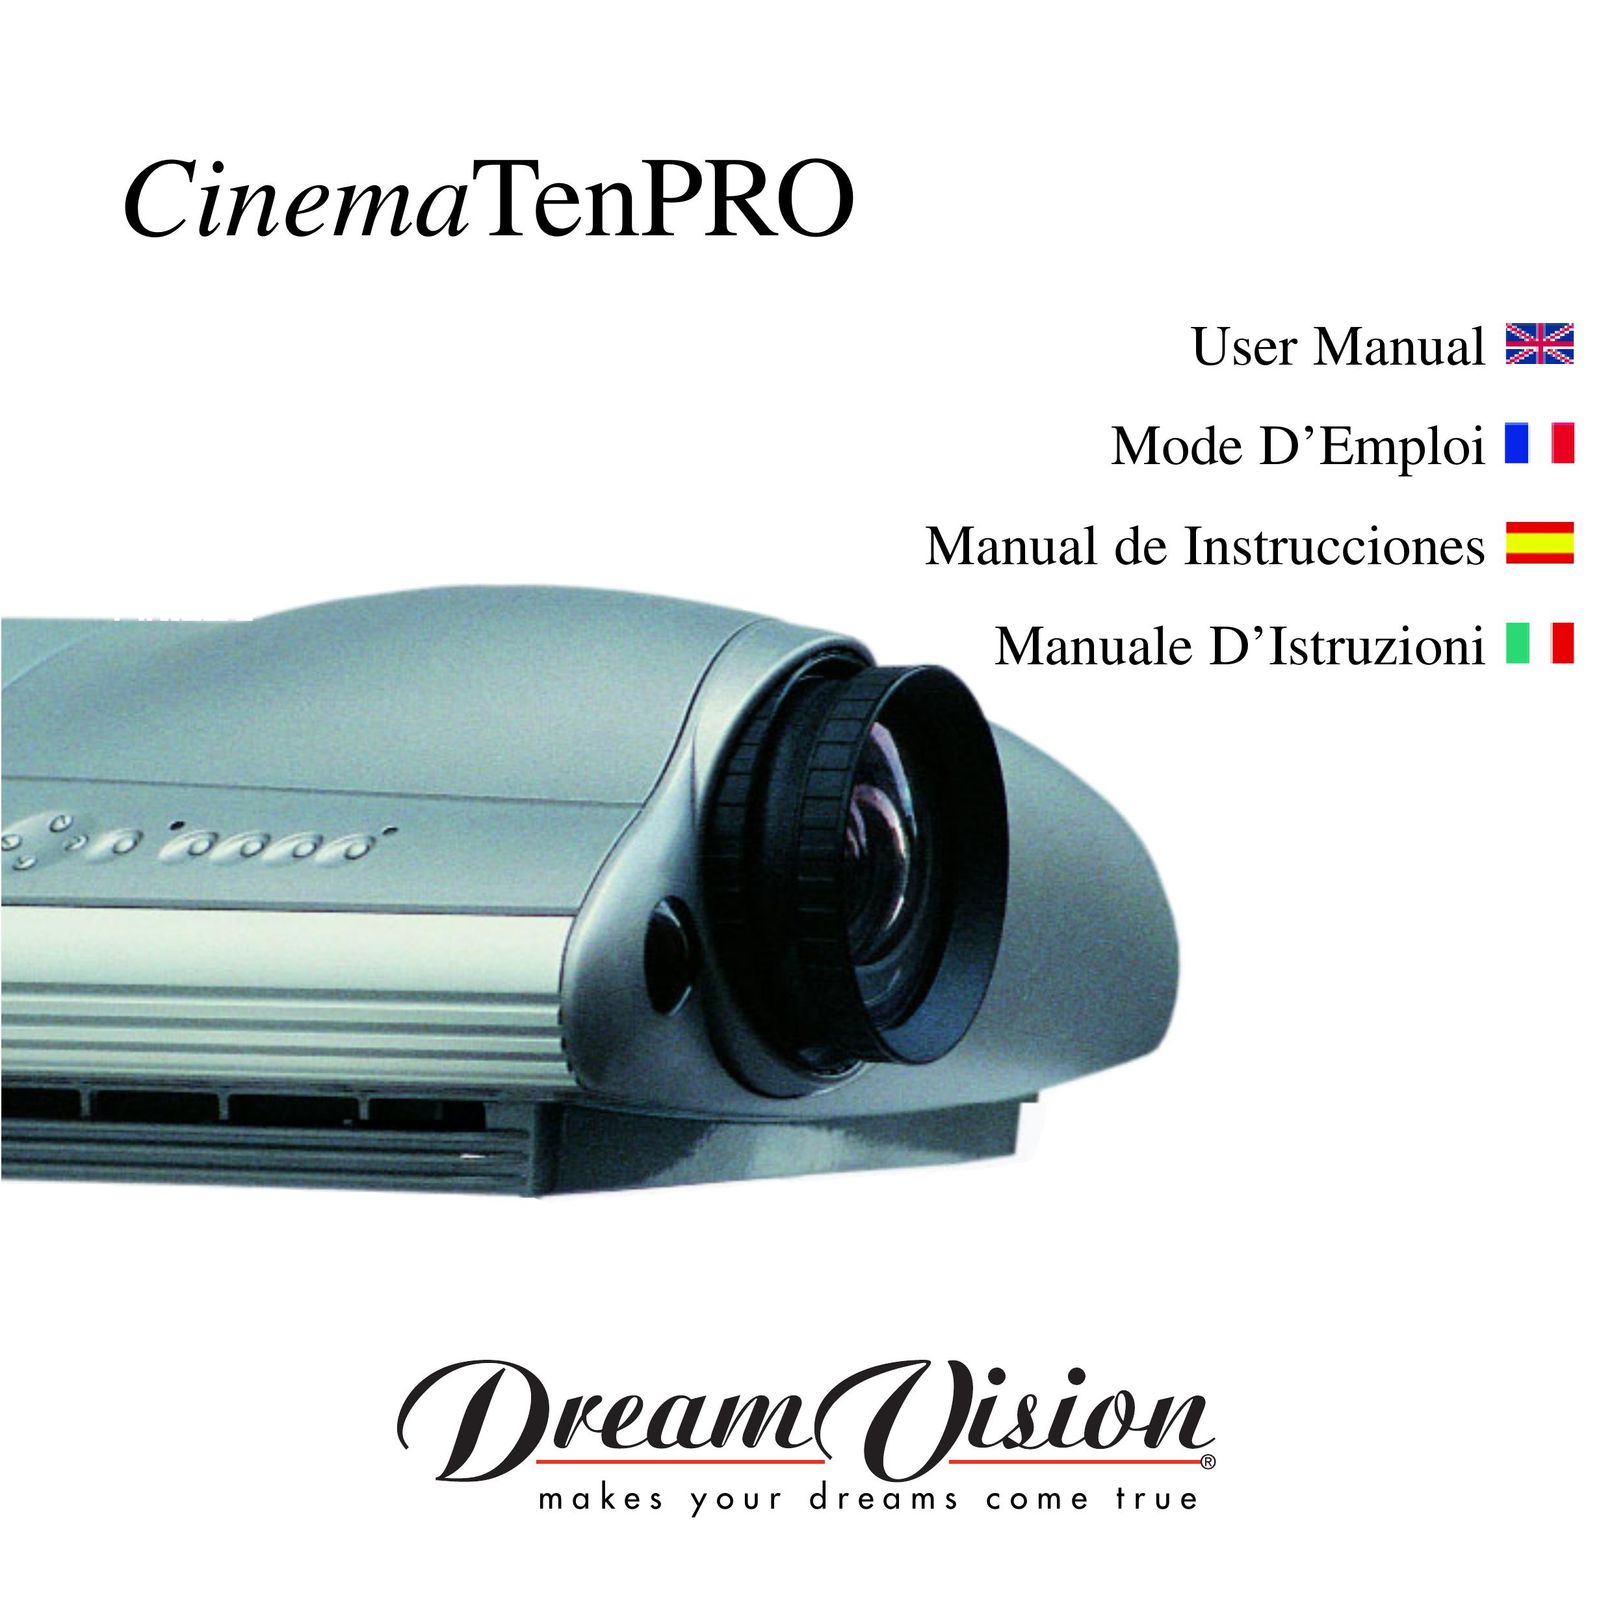 Dream Vision CinemaTenPRO Projector User Manual